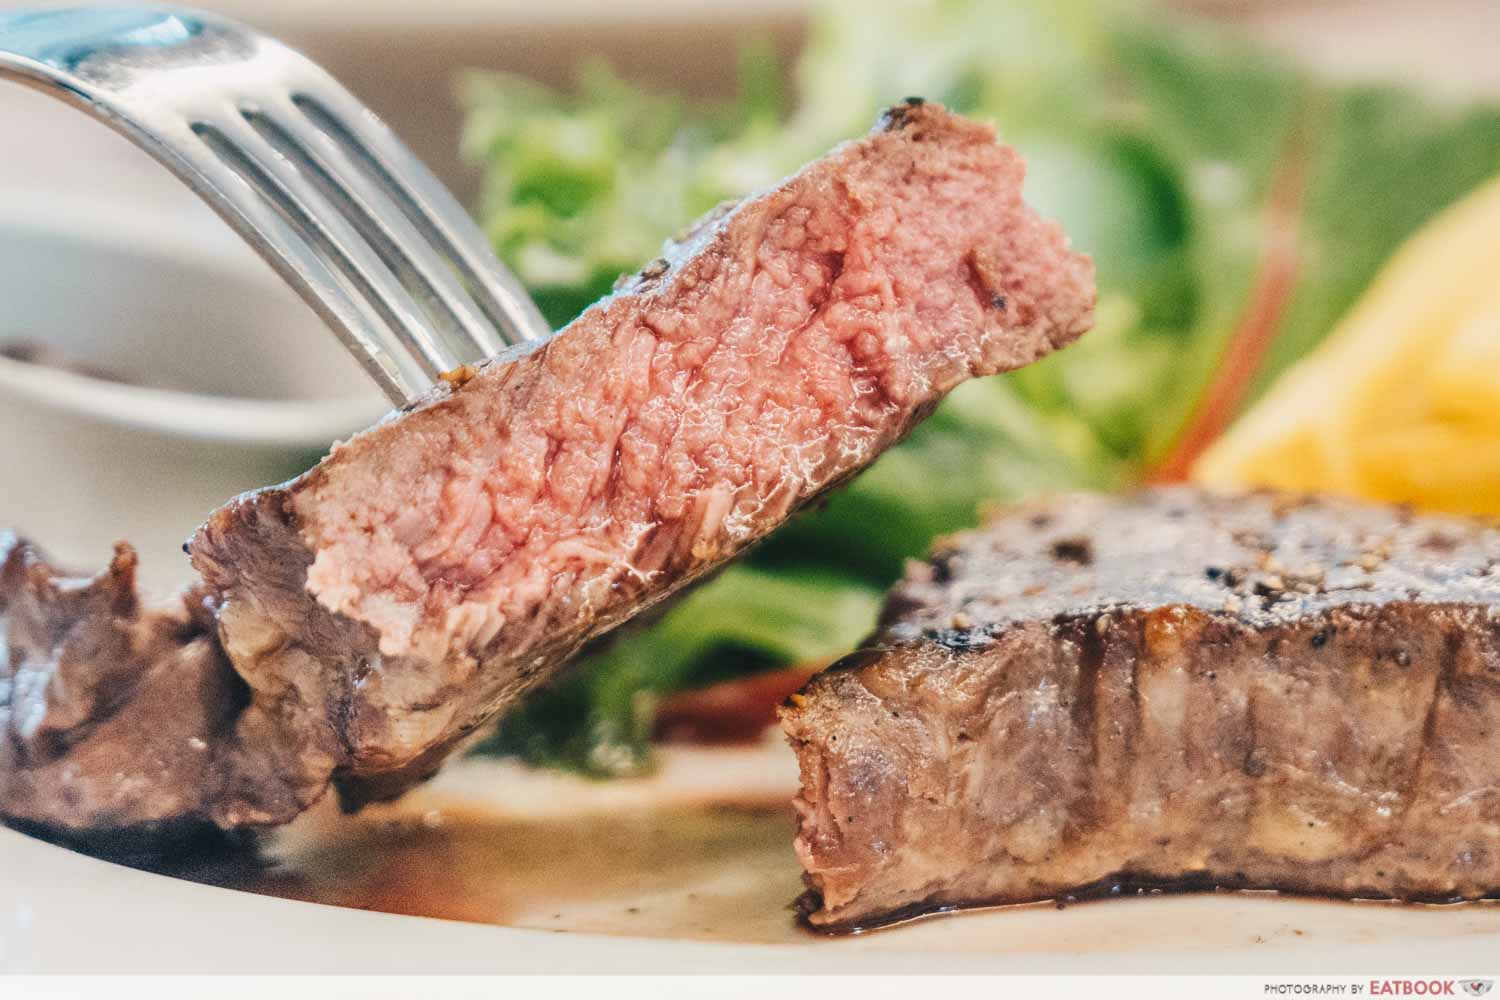 SteakGrill - NY Strip Steak close up